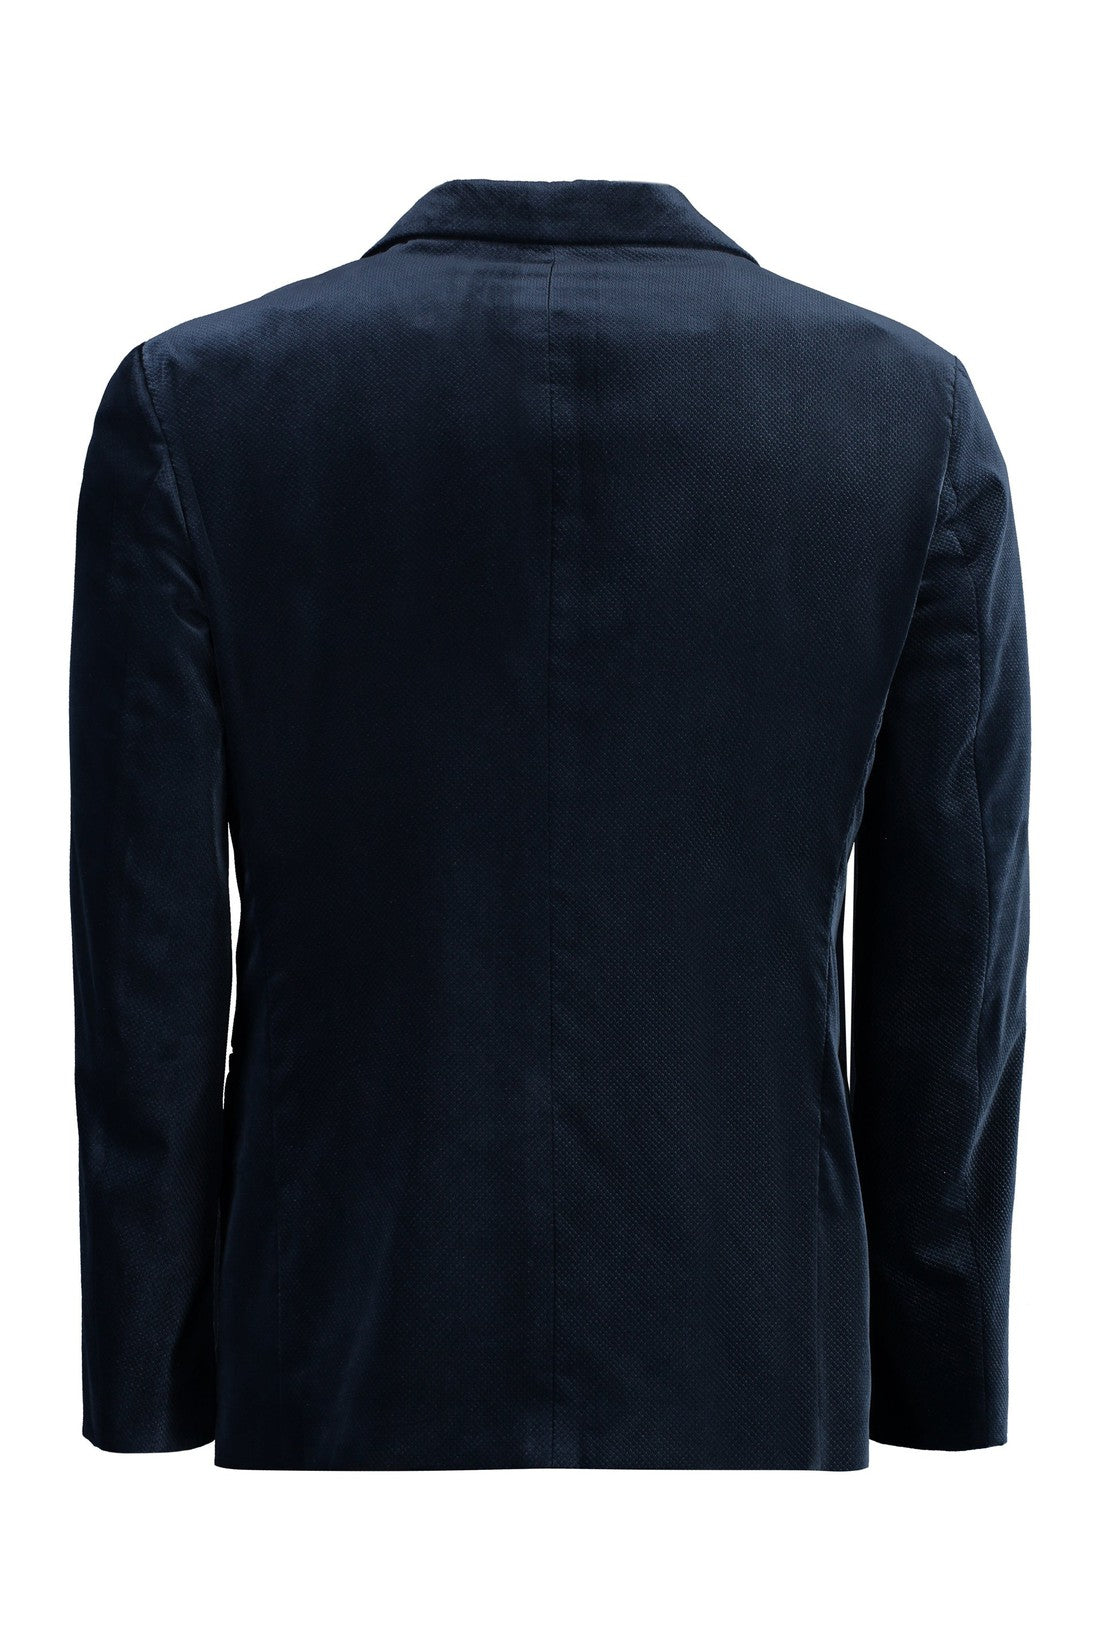 Giorgio Armani-OUTLET-SALE-Single-breasted velvet jacket-ARCHIVIST